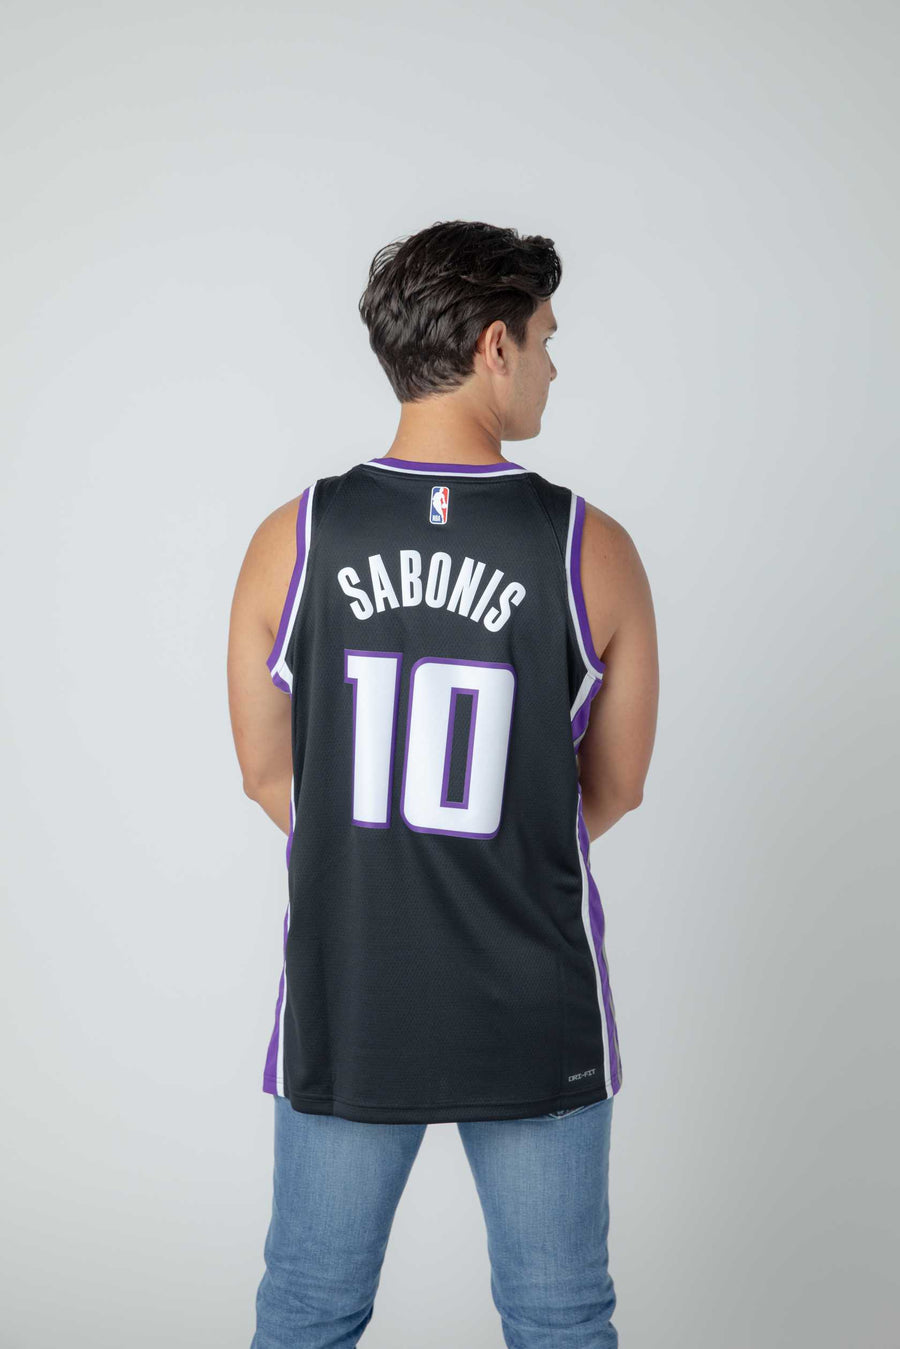 Sacramento Kings Domantas Sabonis 2022/23 NBA White Swingman City